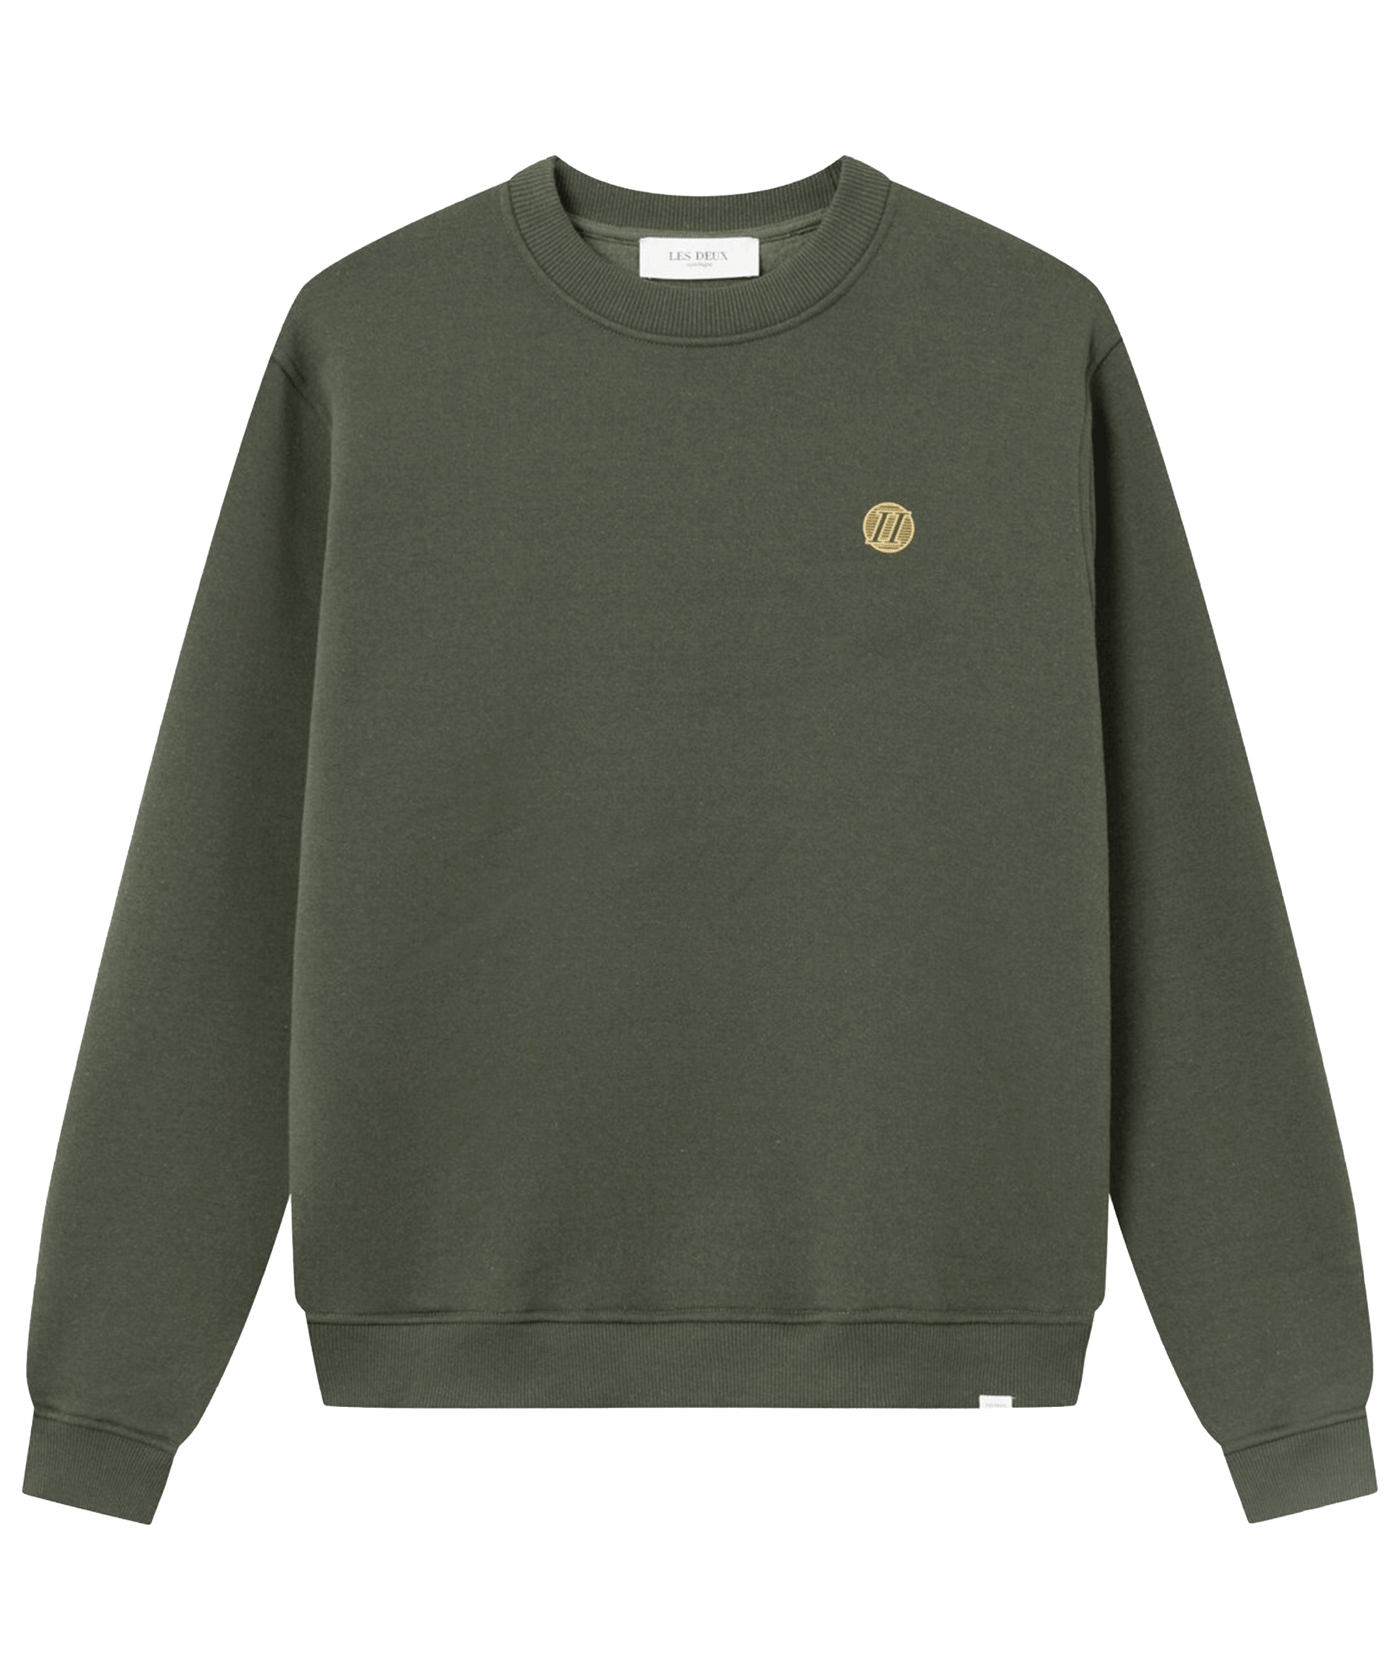 Les Deux - Ldm200130 - Community Sweater - Olive Night